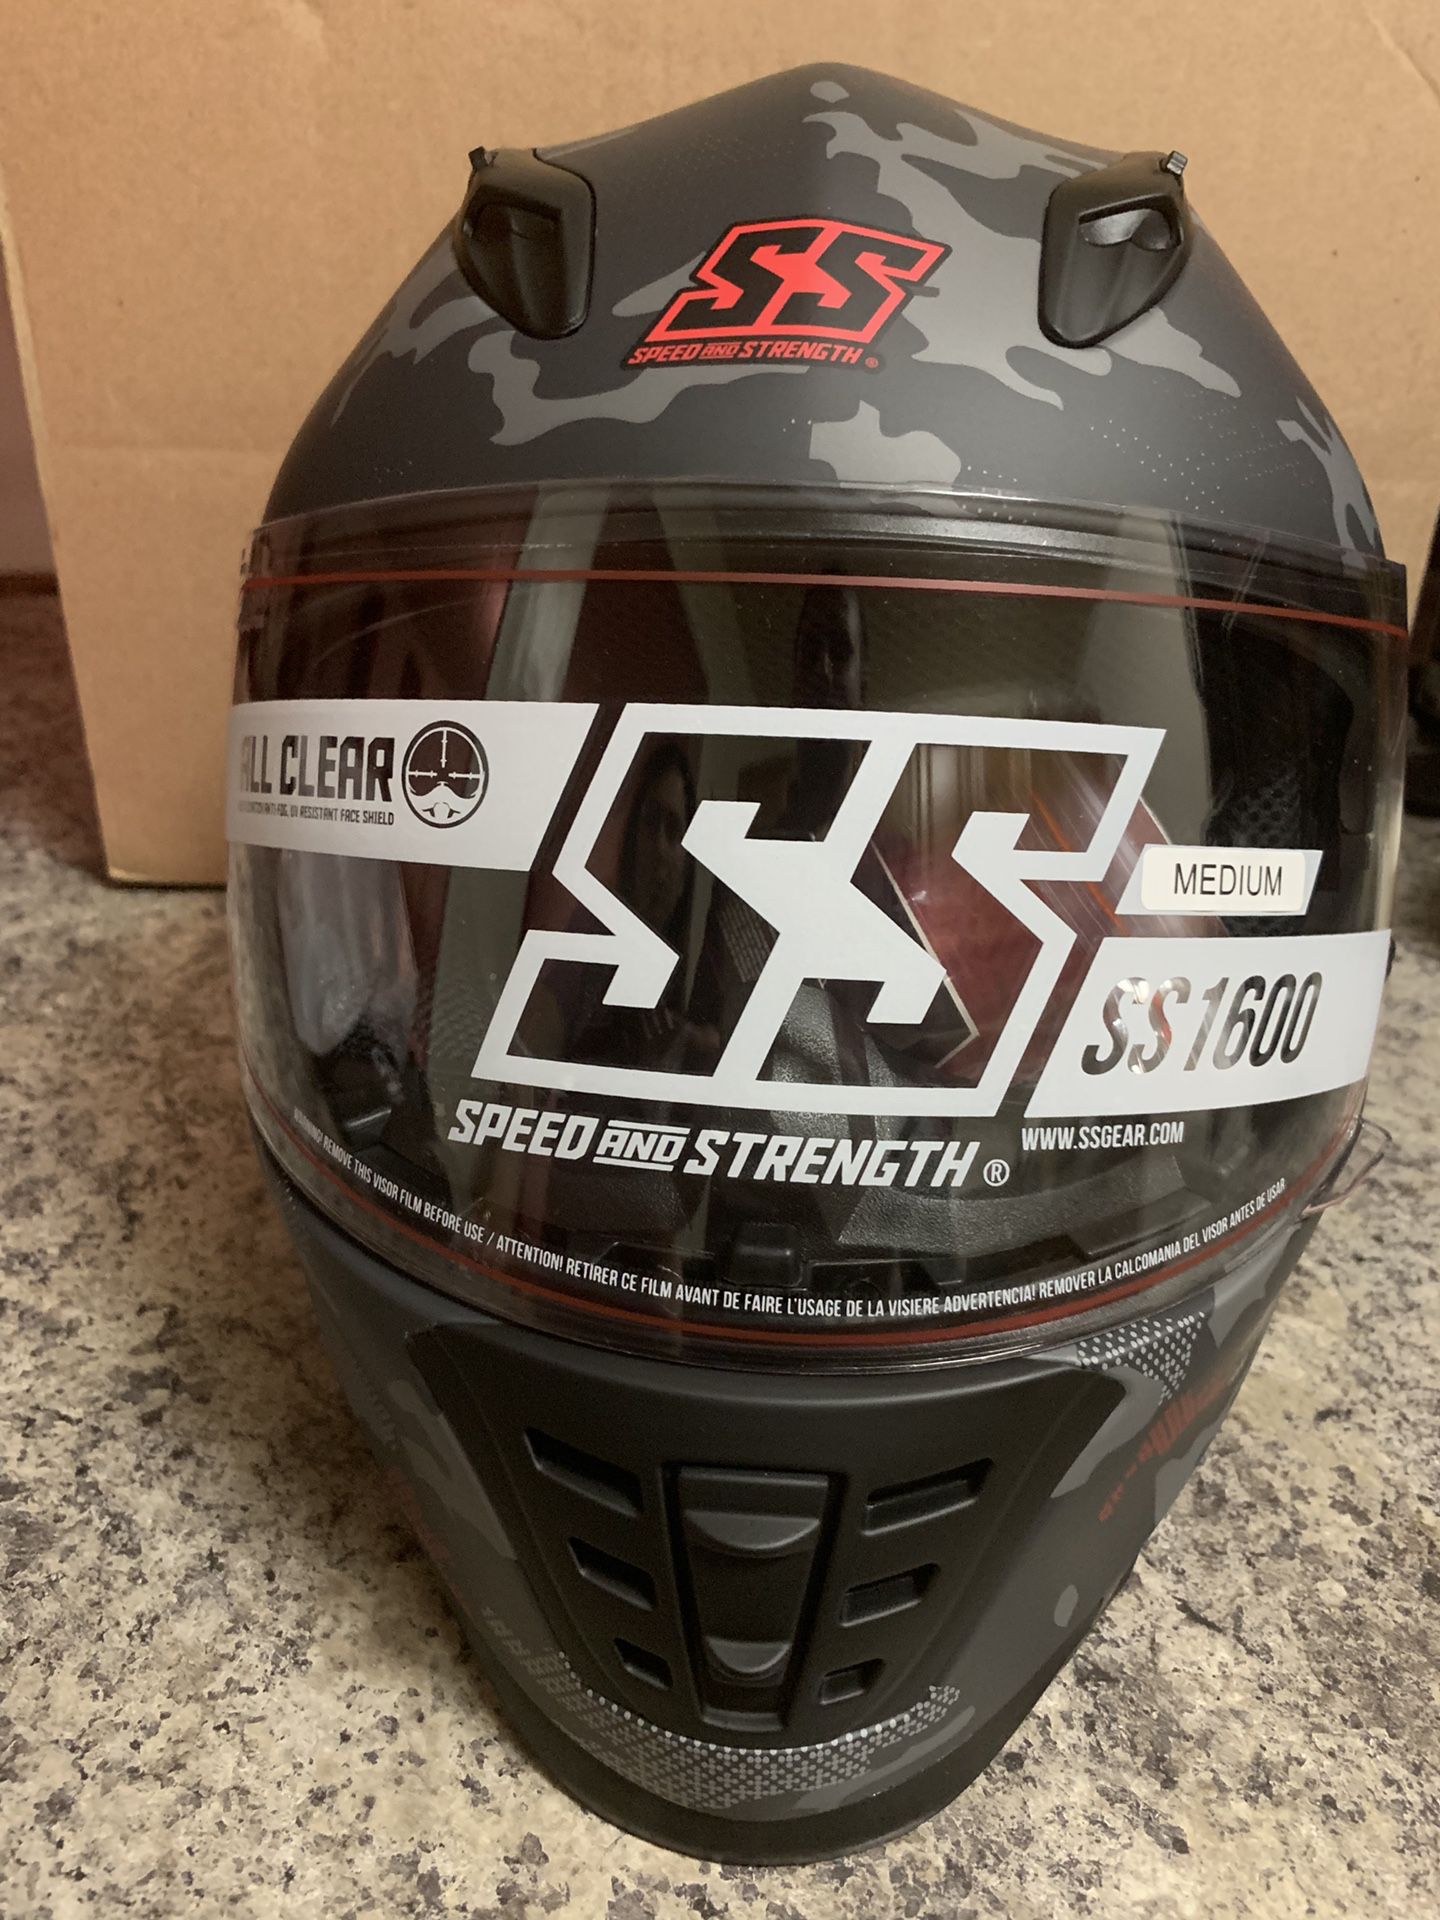 SS1600 Straight Savage Street Motorcycle Helmet